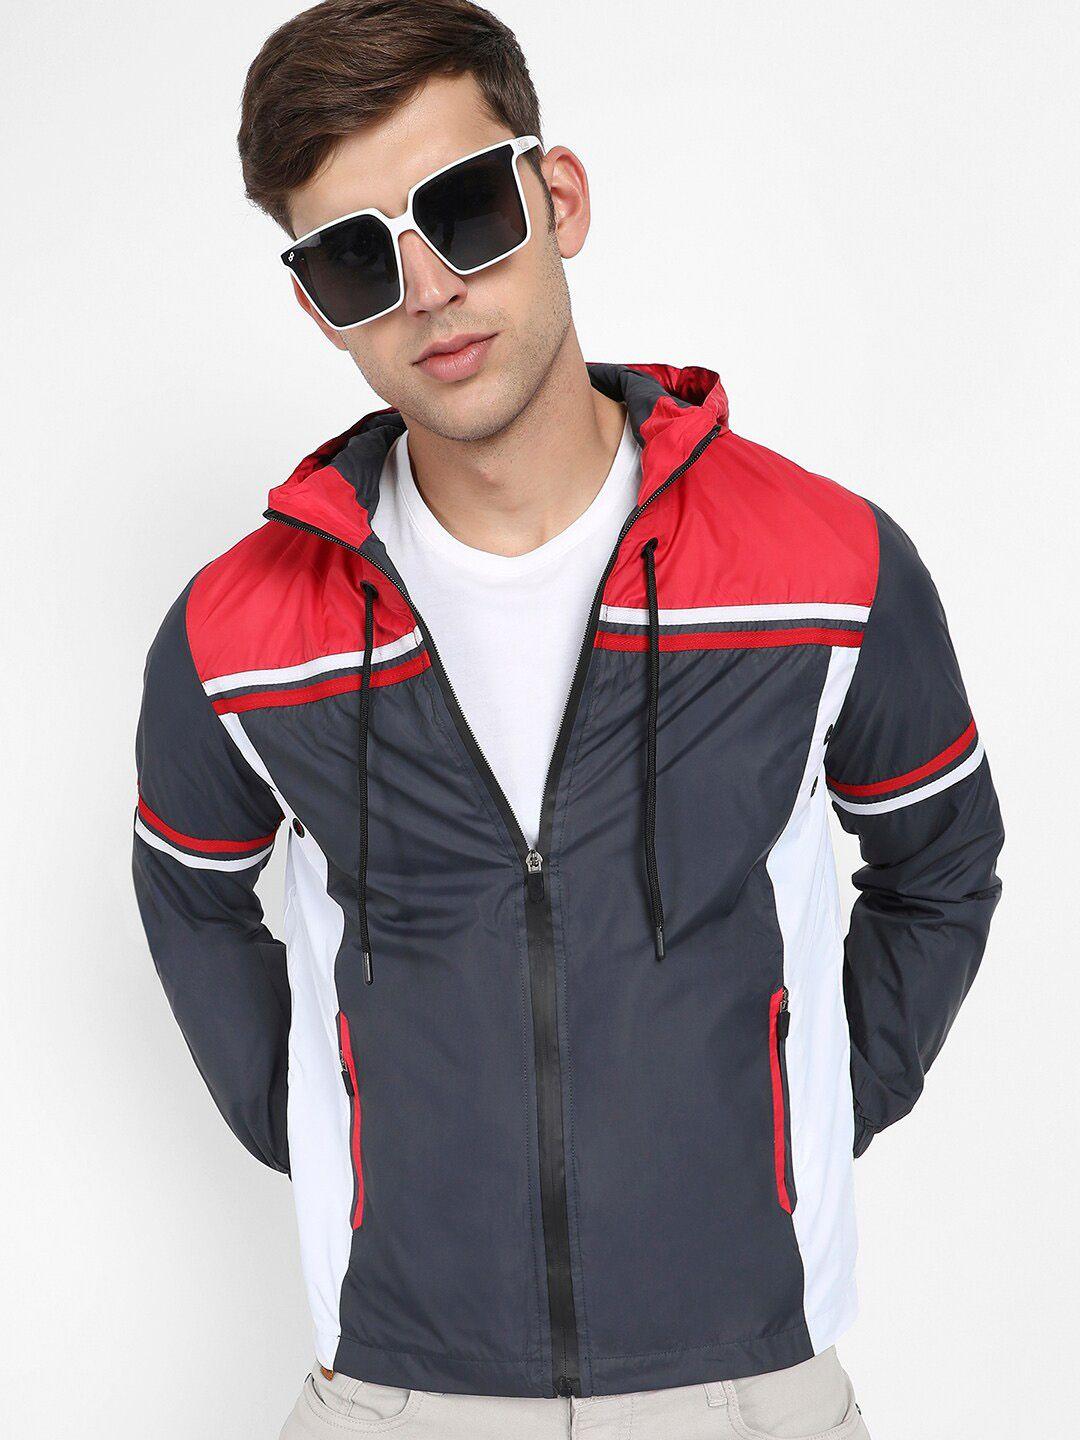 campus sutra hooded colourblocked windcheater outdoor tailored jacket